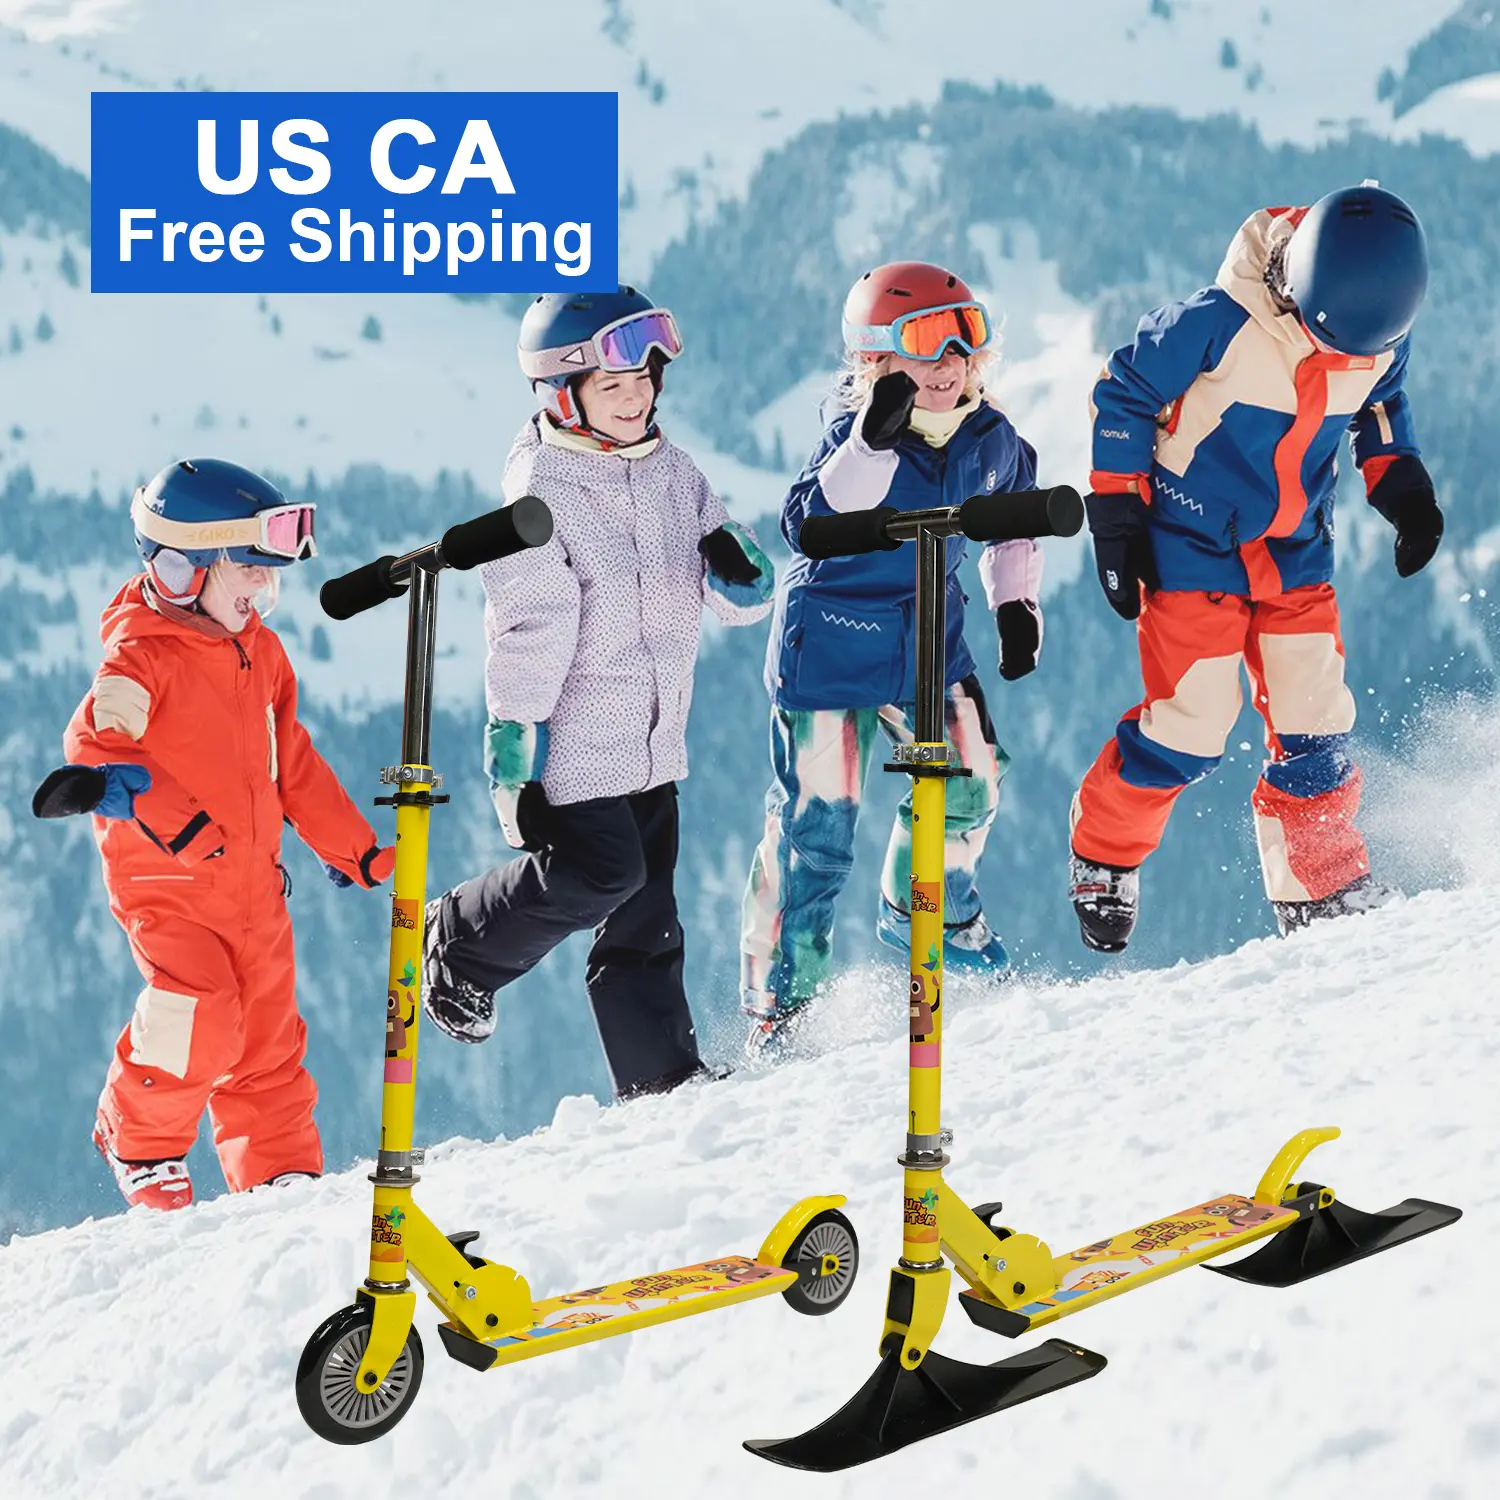 US CA Kostenloser Versand Drops hipping China Factory Supply Großhandel Schnee Kick Ski Roller Kinder Fal troller Kinder für den Winter